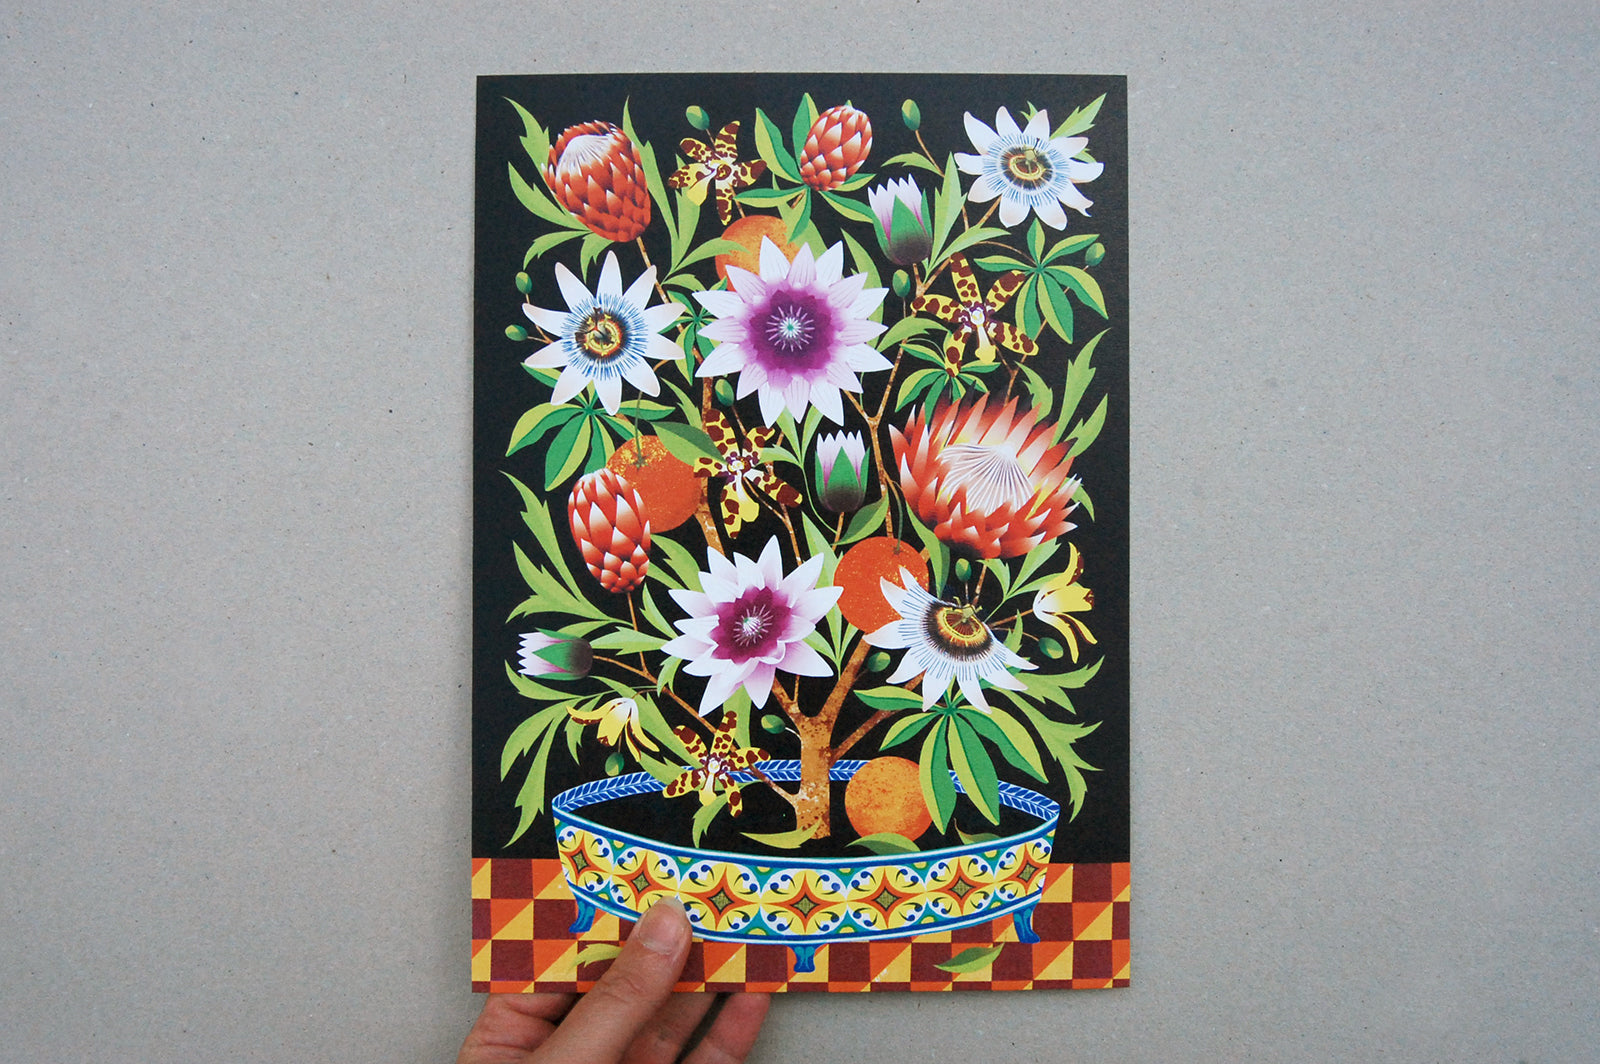 In Bloom A4 Digital Print by Printer Johnson-ad&i